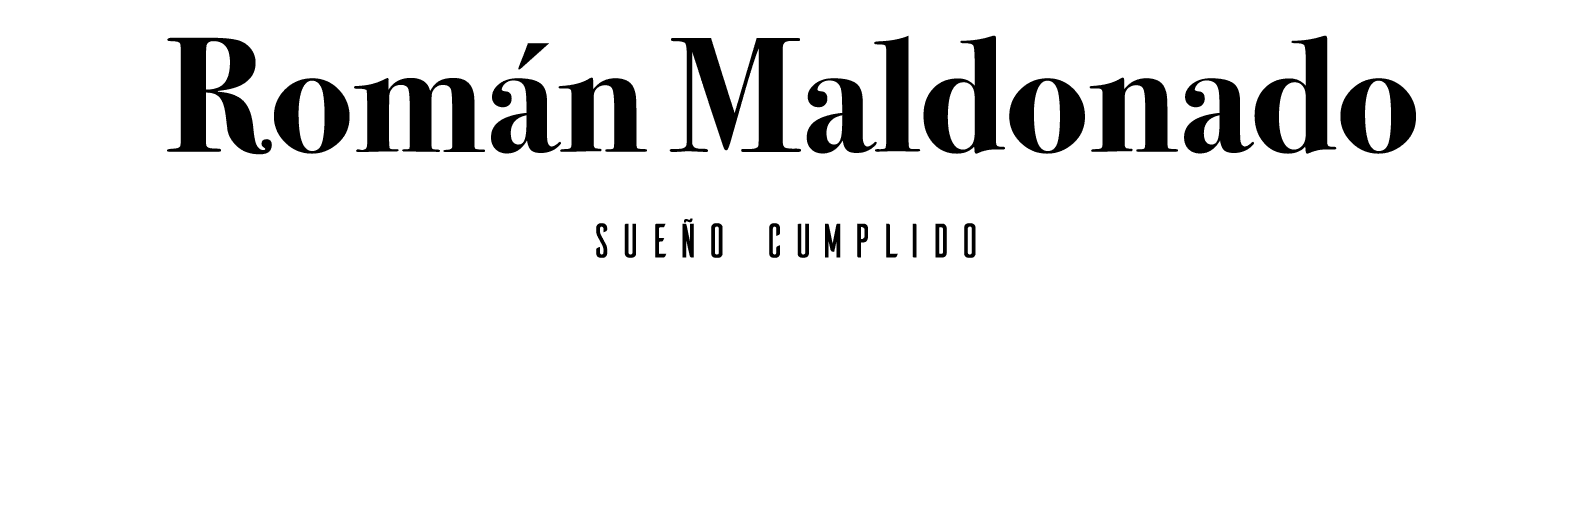 Román Maldonado SUEÑO CUMPLIDO